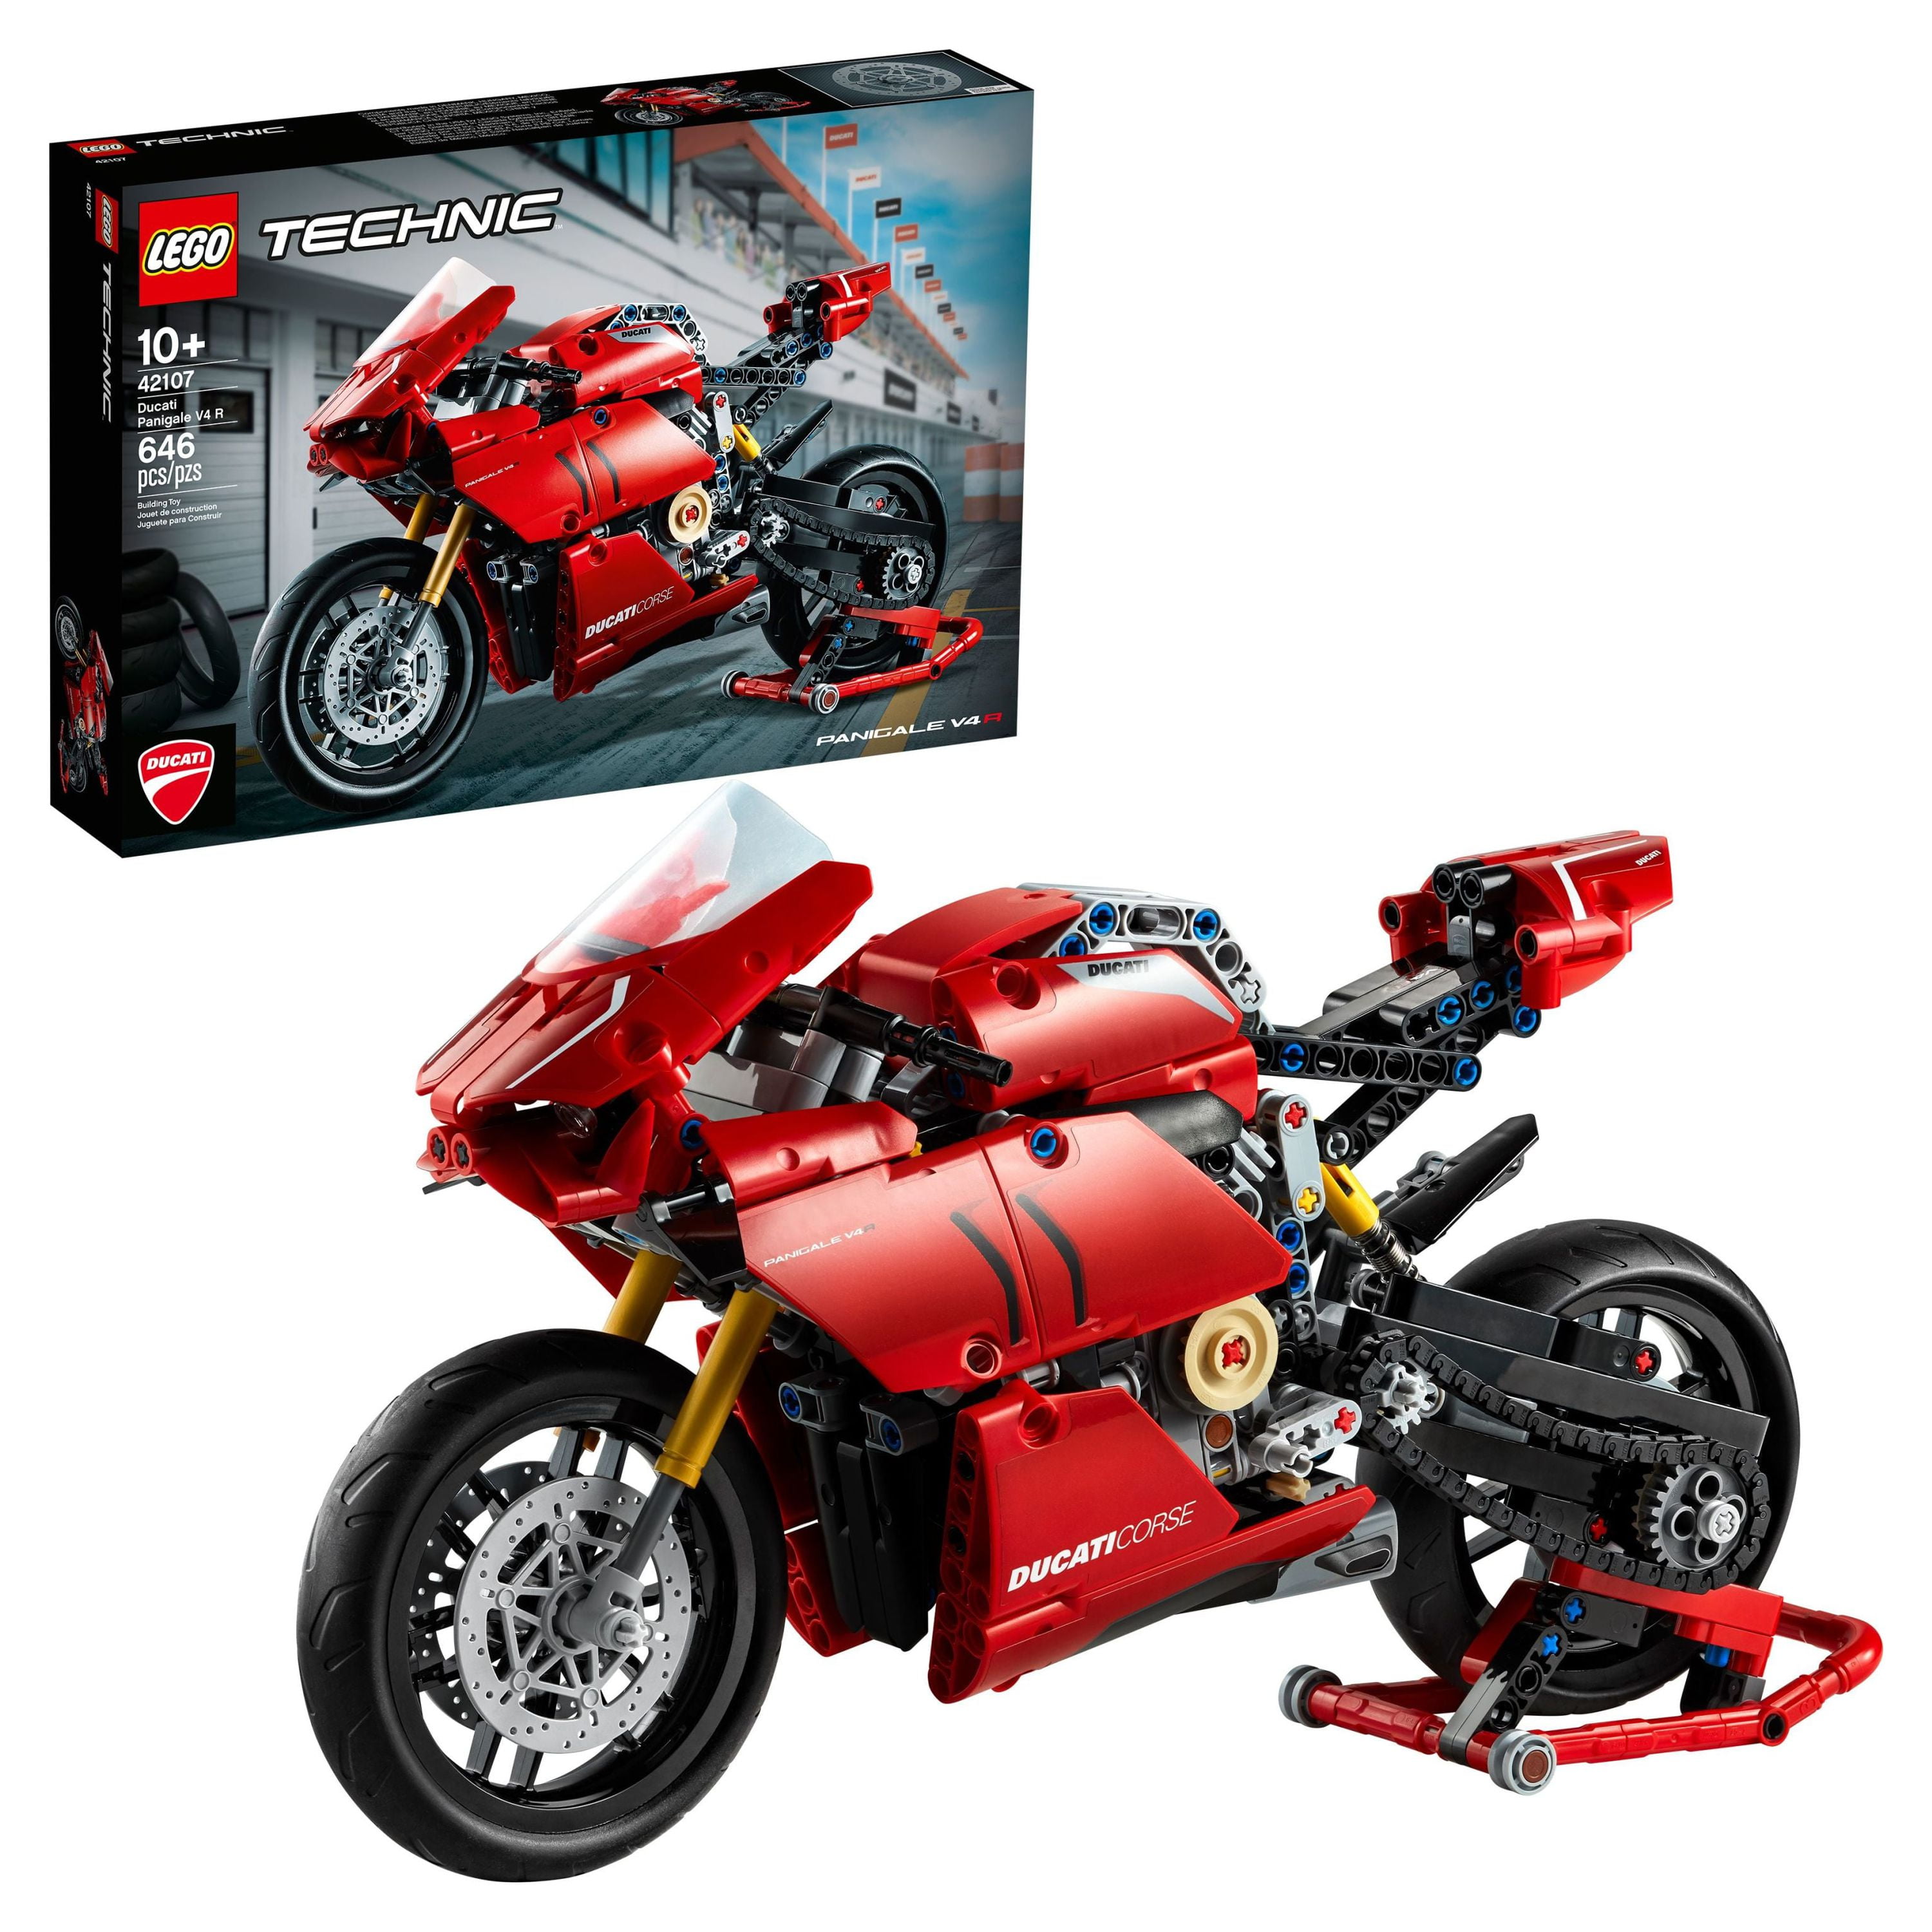  LEGO Technic Street Motorcycle : Toys & Games